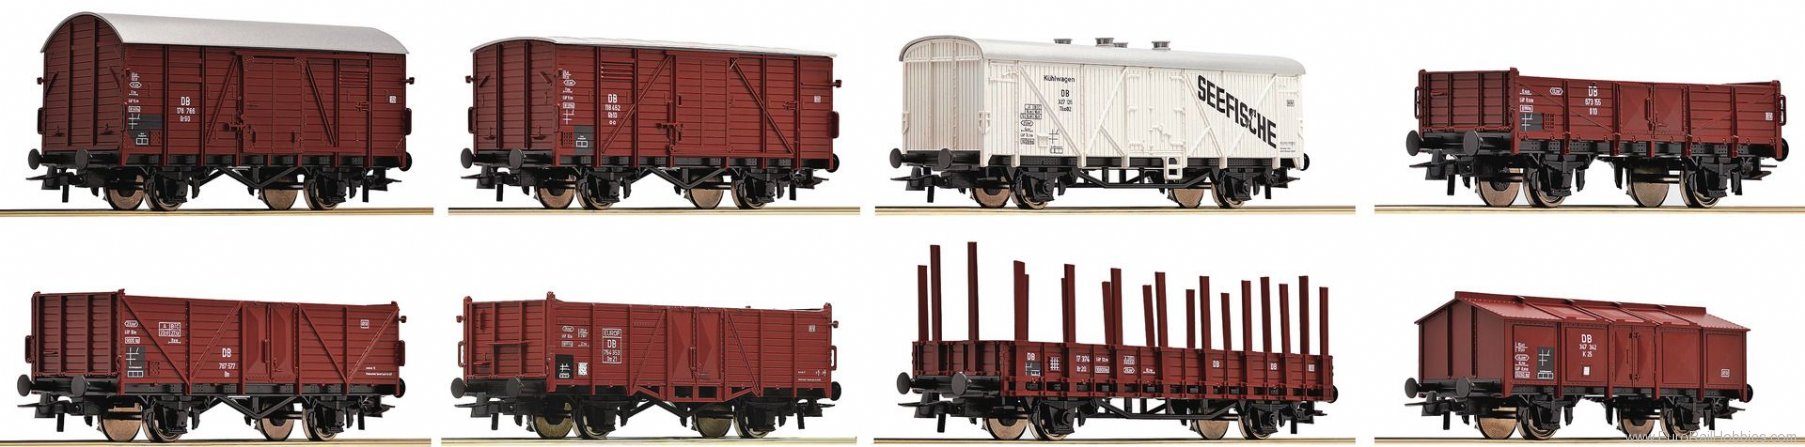 Roco 44002 DB 8-Piece Freight Car Set